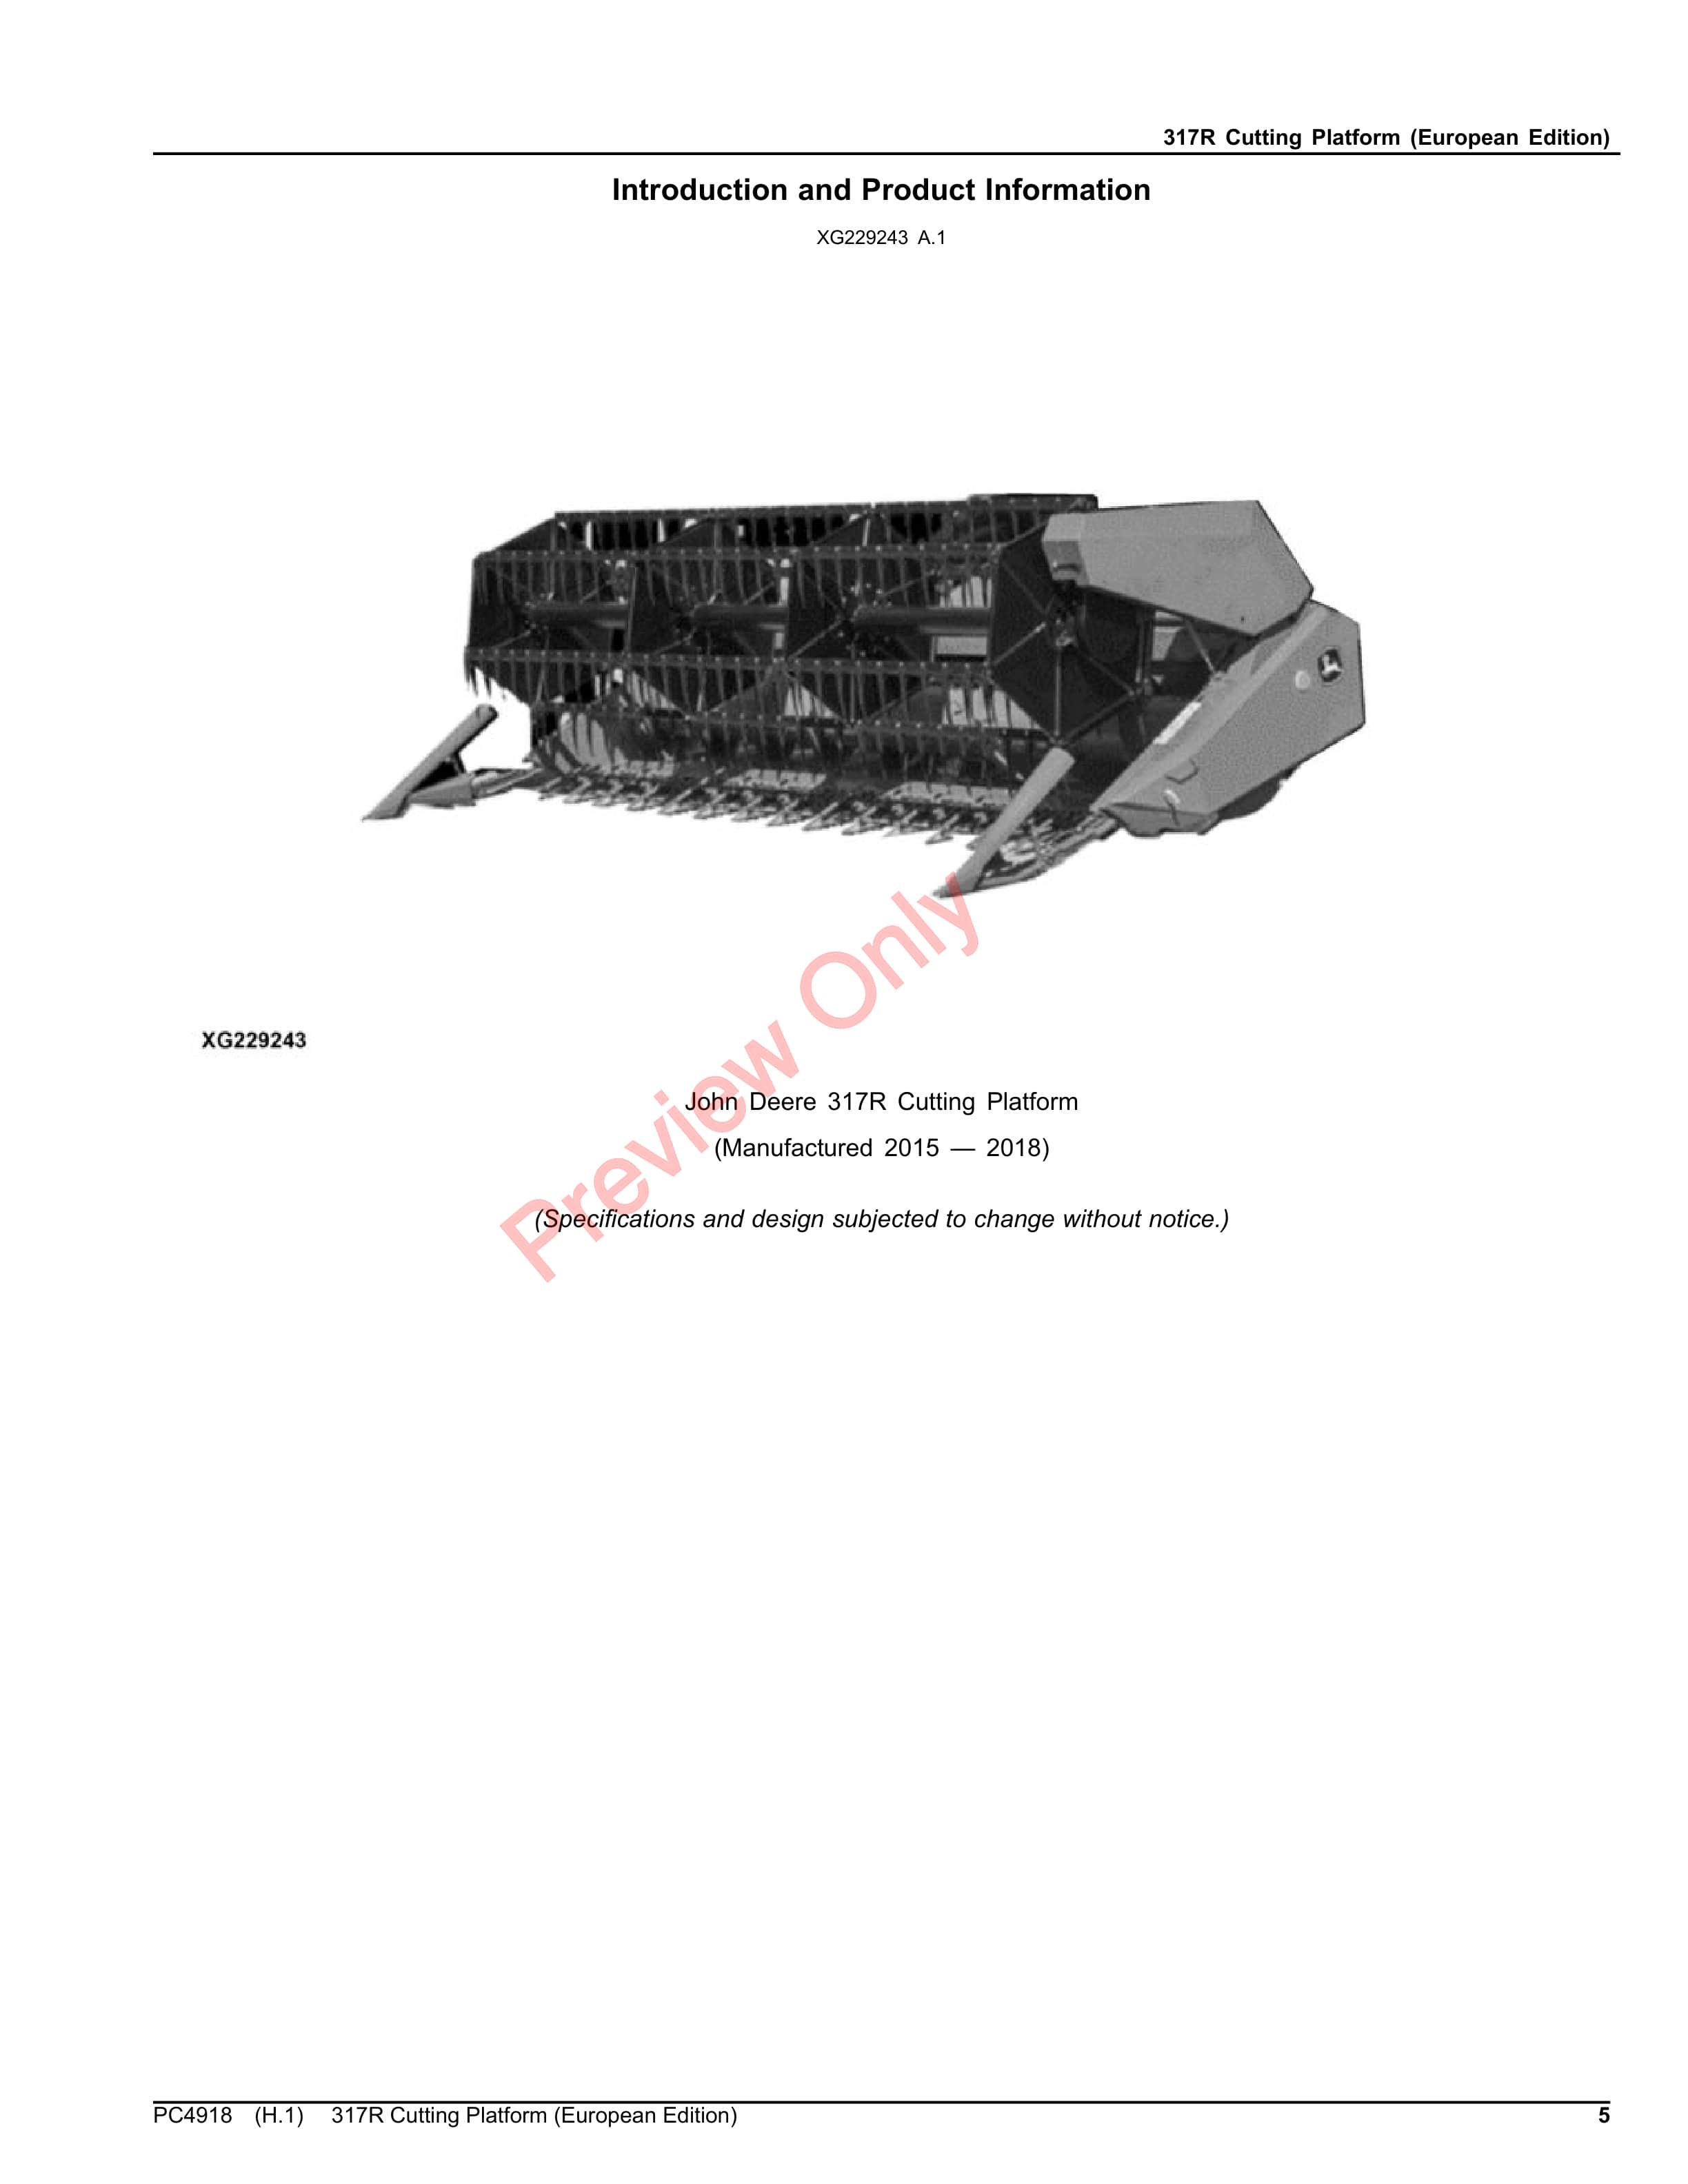 John Deere 317R Cutting Platform Parts Catalog PC4918 11MAR20-5